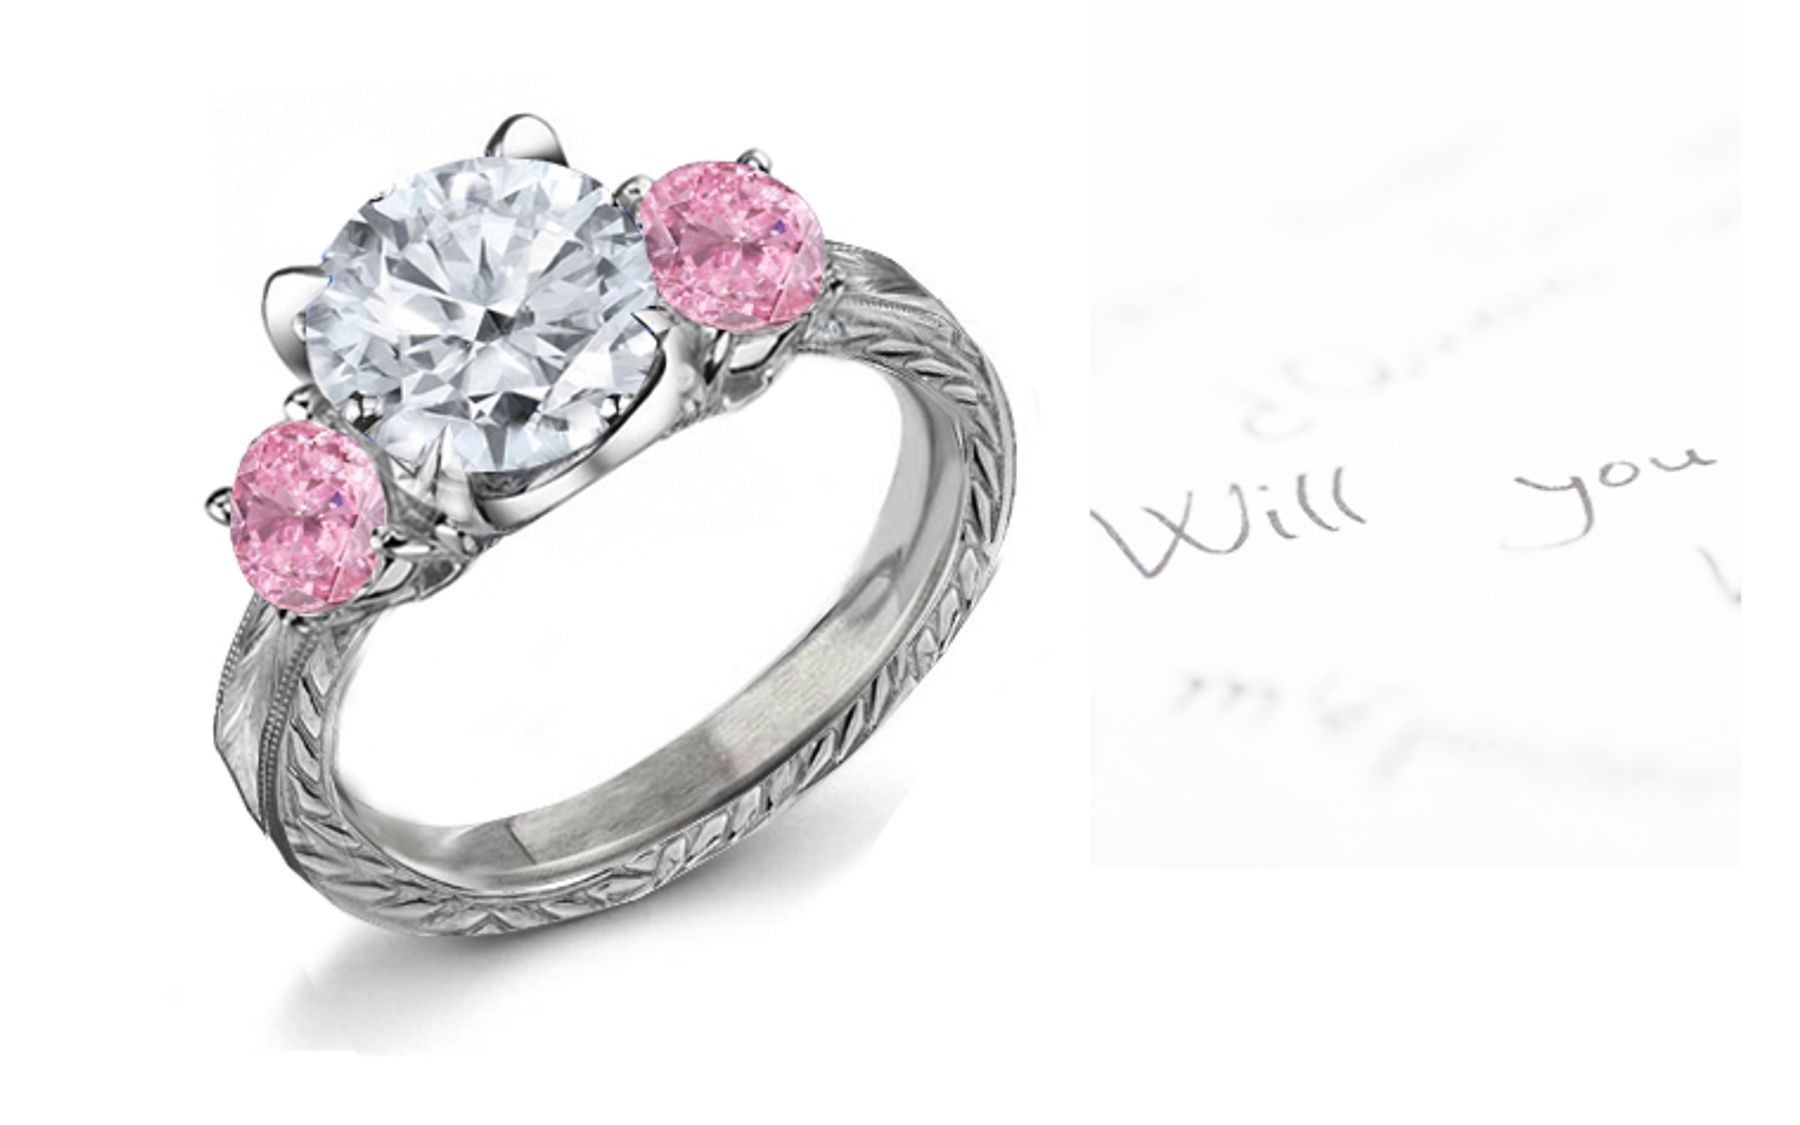 Pink Colored Diamonds & White Diamonds Fancy Pink Diamond Ring